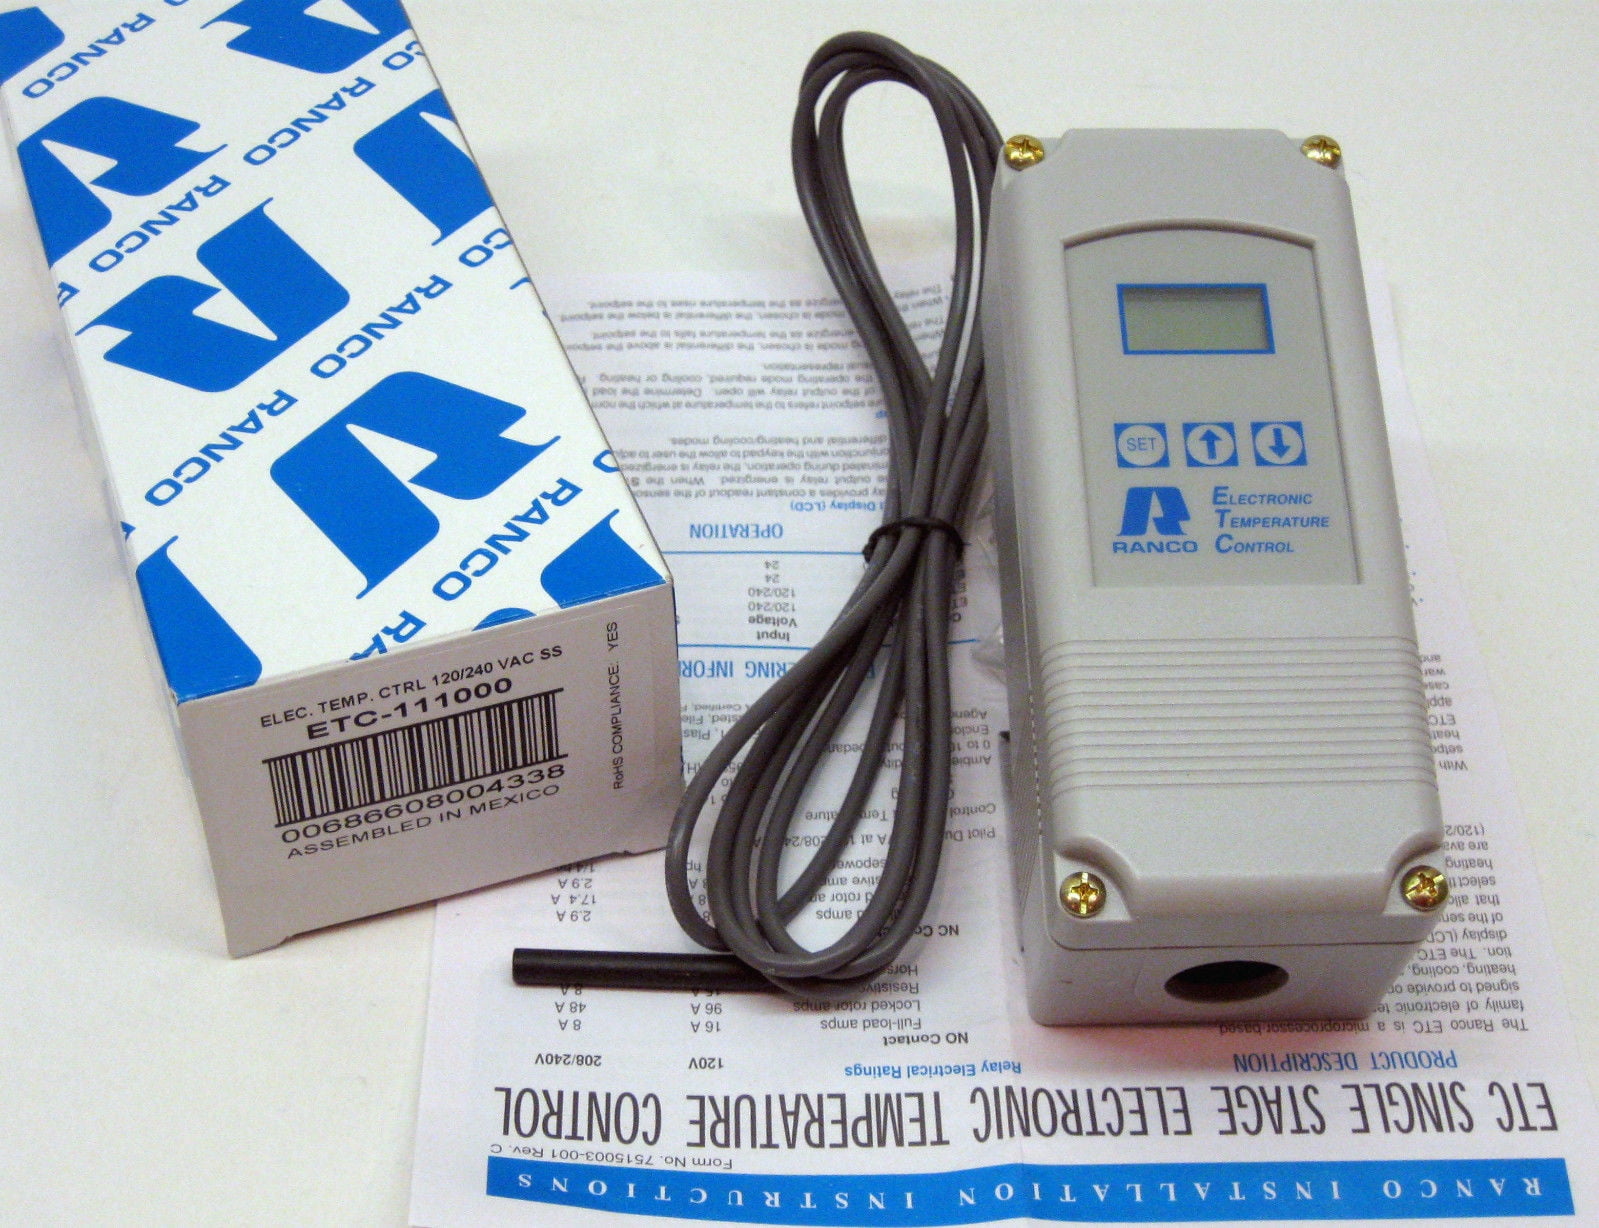 RANCO ETC-111000 Digital Cold Temperature Control New